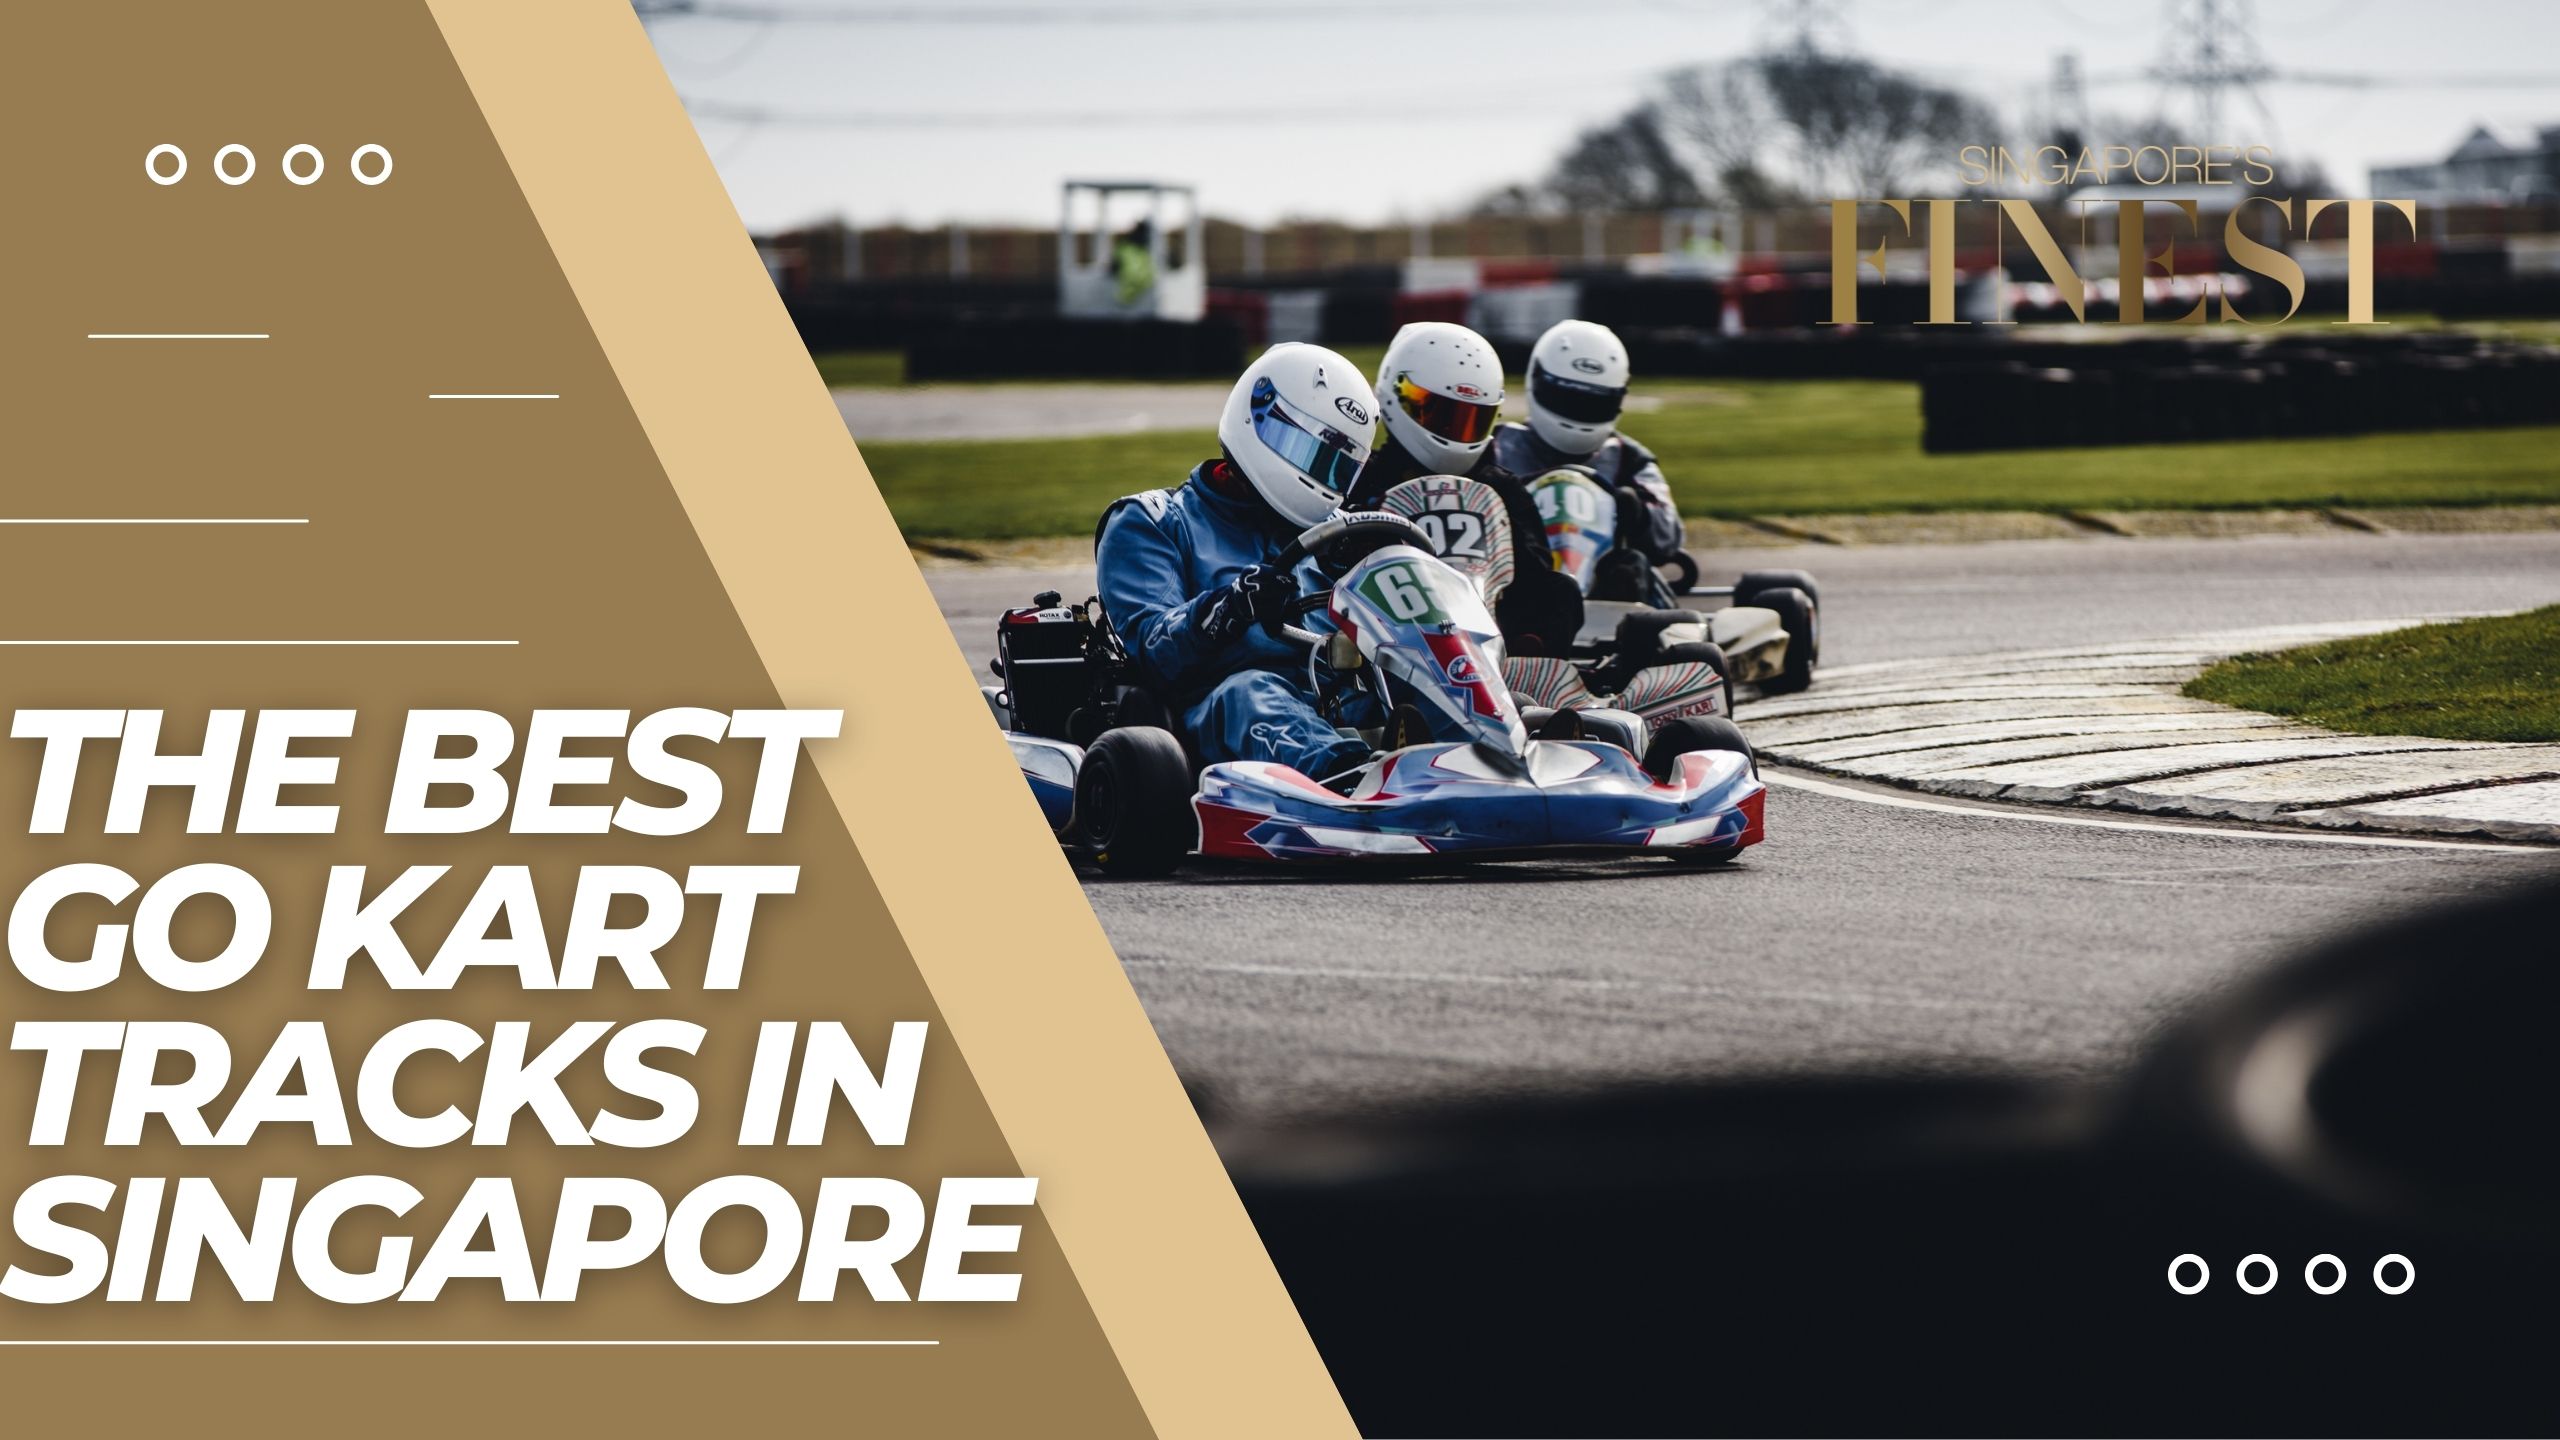 The Finest Go Kart Tracks in Singapore